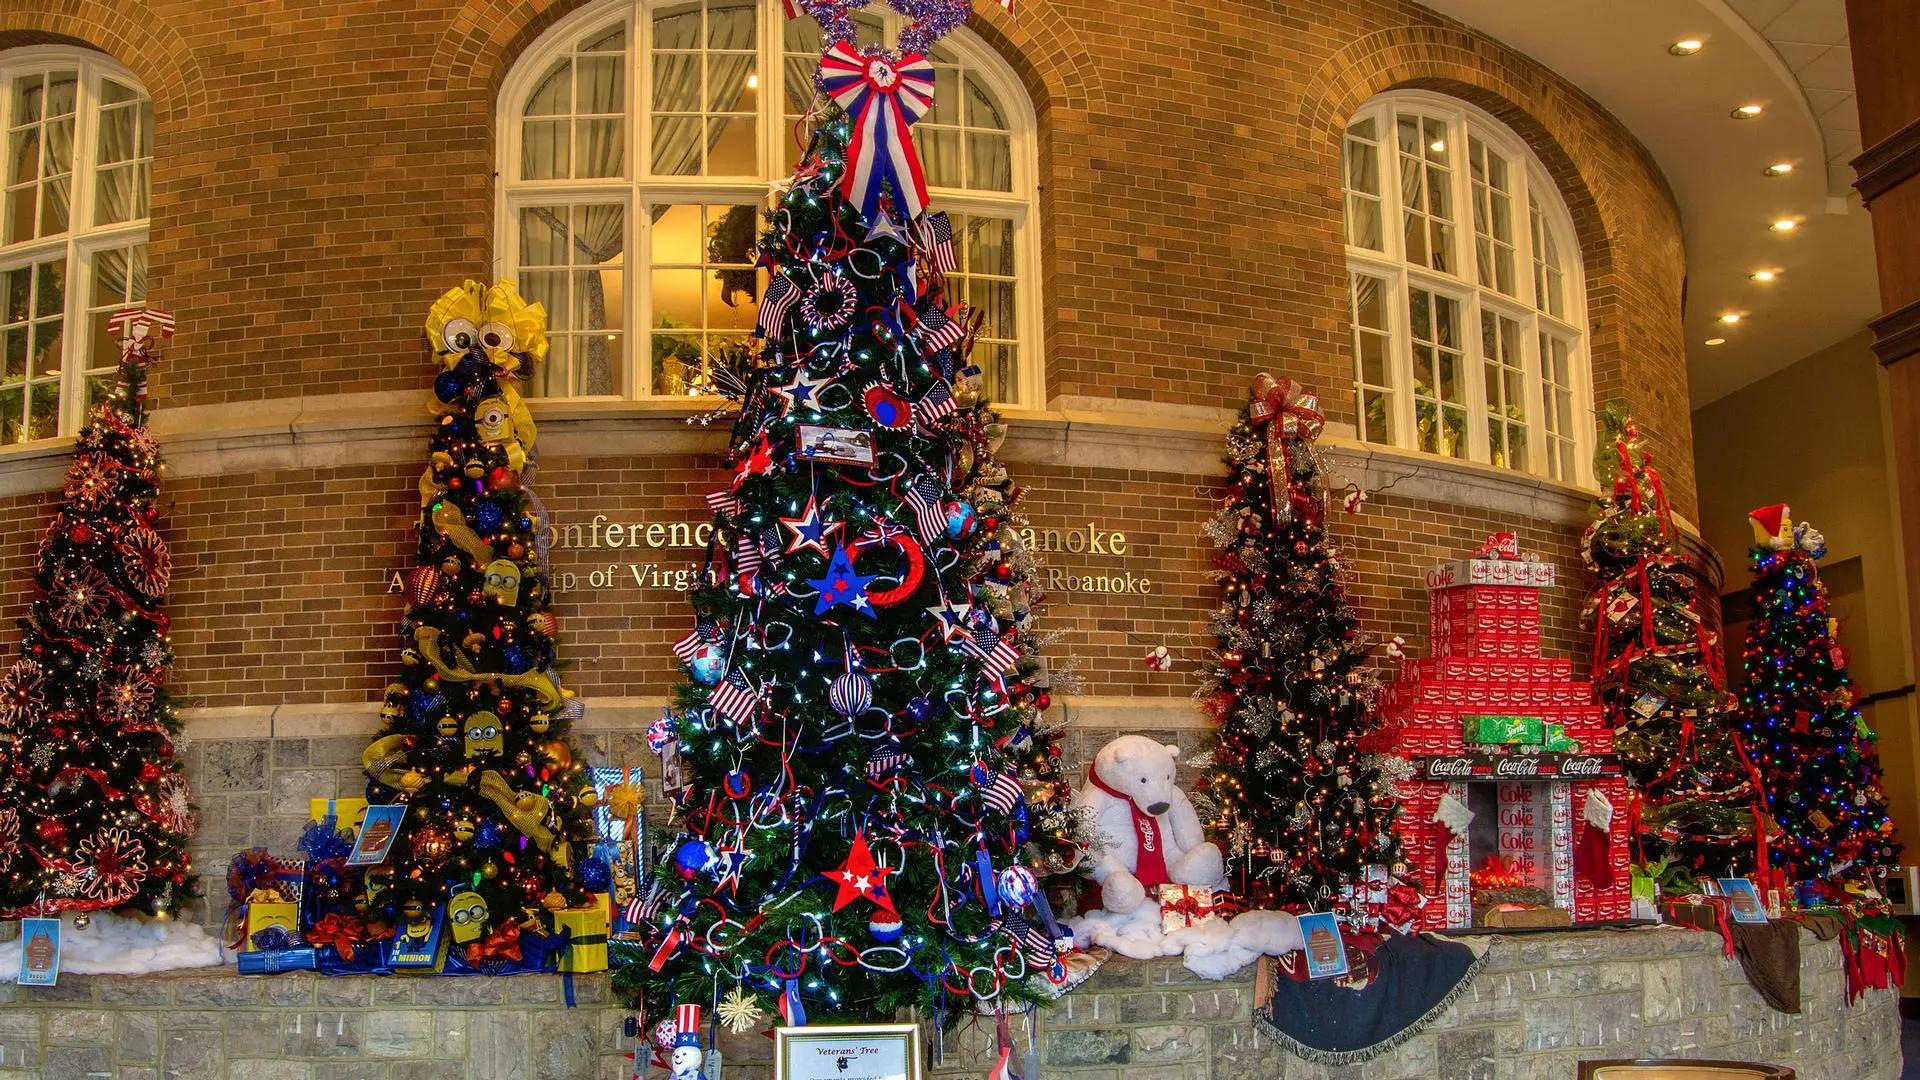 Display of Christmas trees at Hotel Roanoke